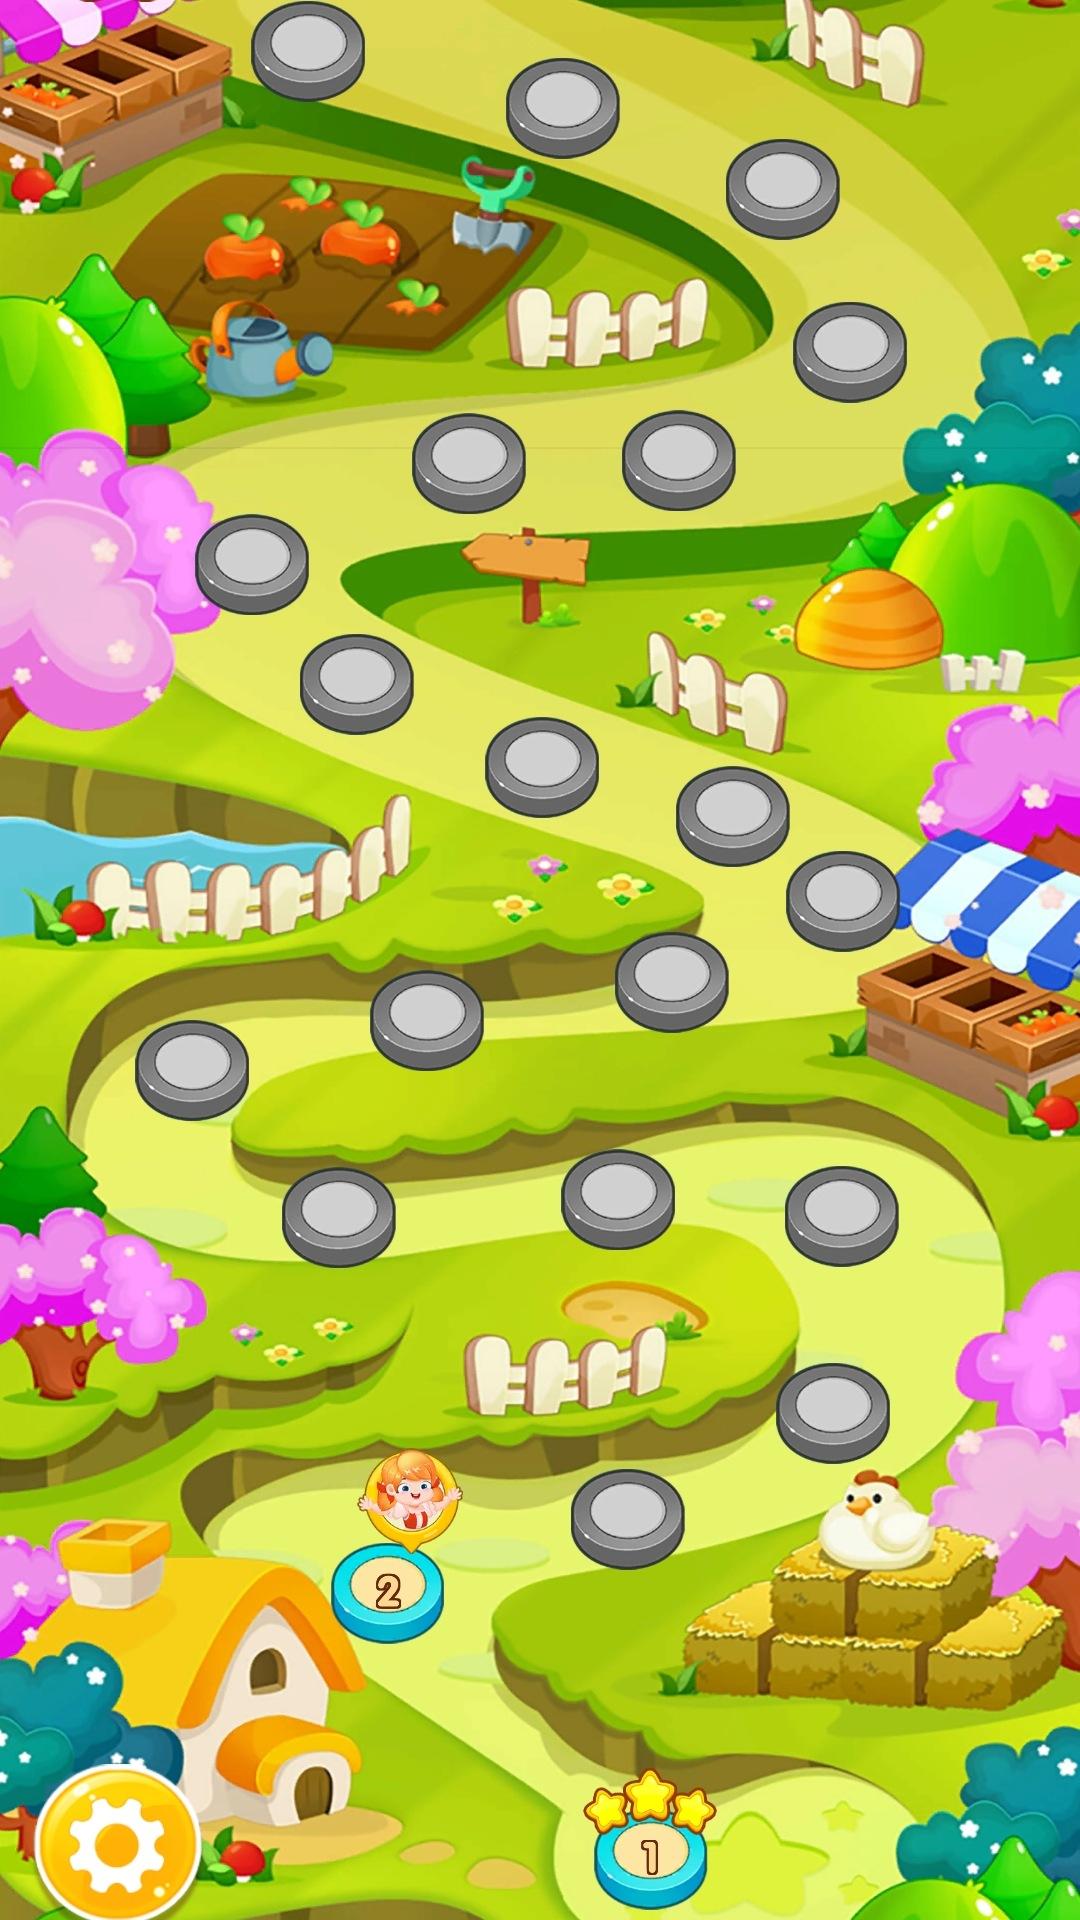 One fruit game. Fruit Farm игра. Игра Fruit Master Saga. Fruit Paradise Match 3 игры. Android фрукты с глазами игра.